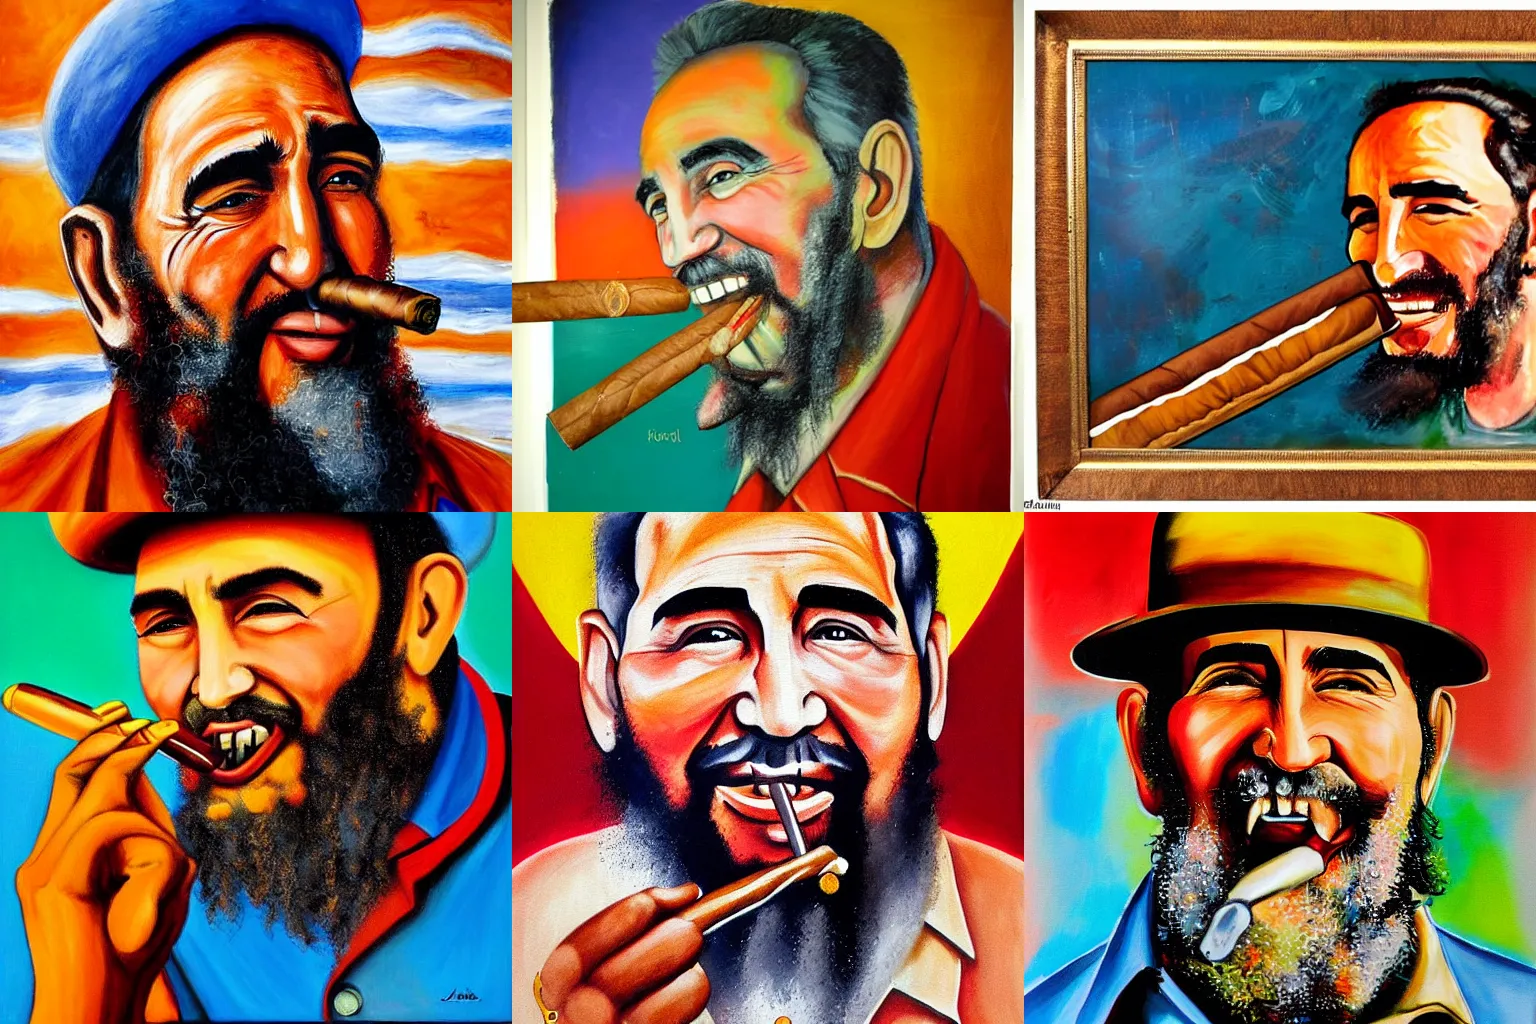 Prompt: epic painted portrait of fidel castro smiling with a cigar - warm colors - cuba - havana